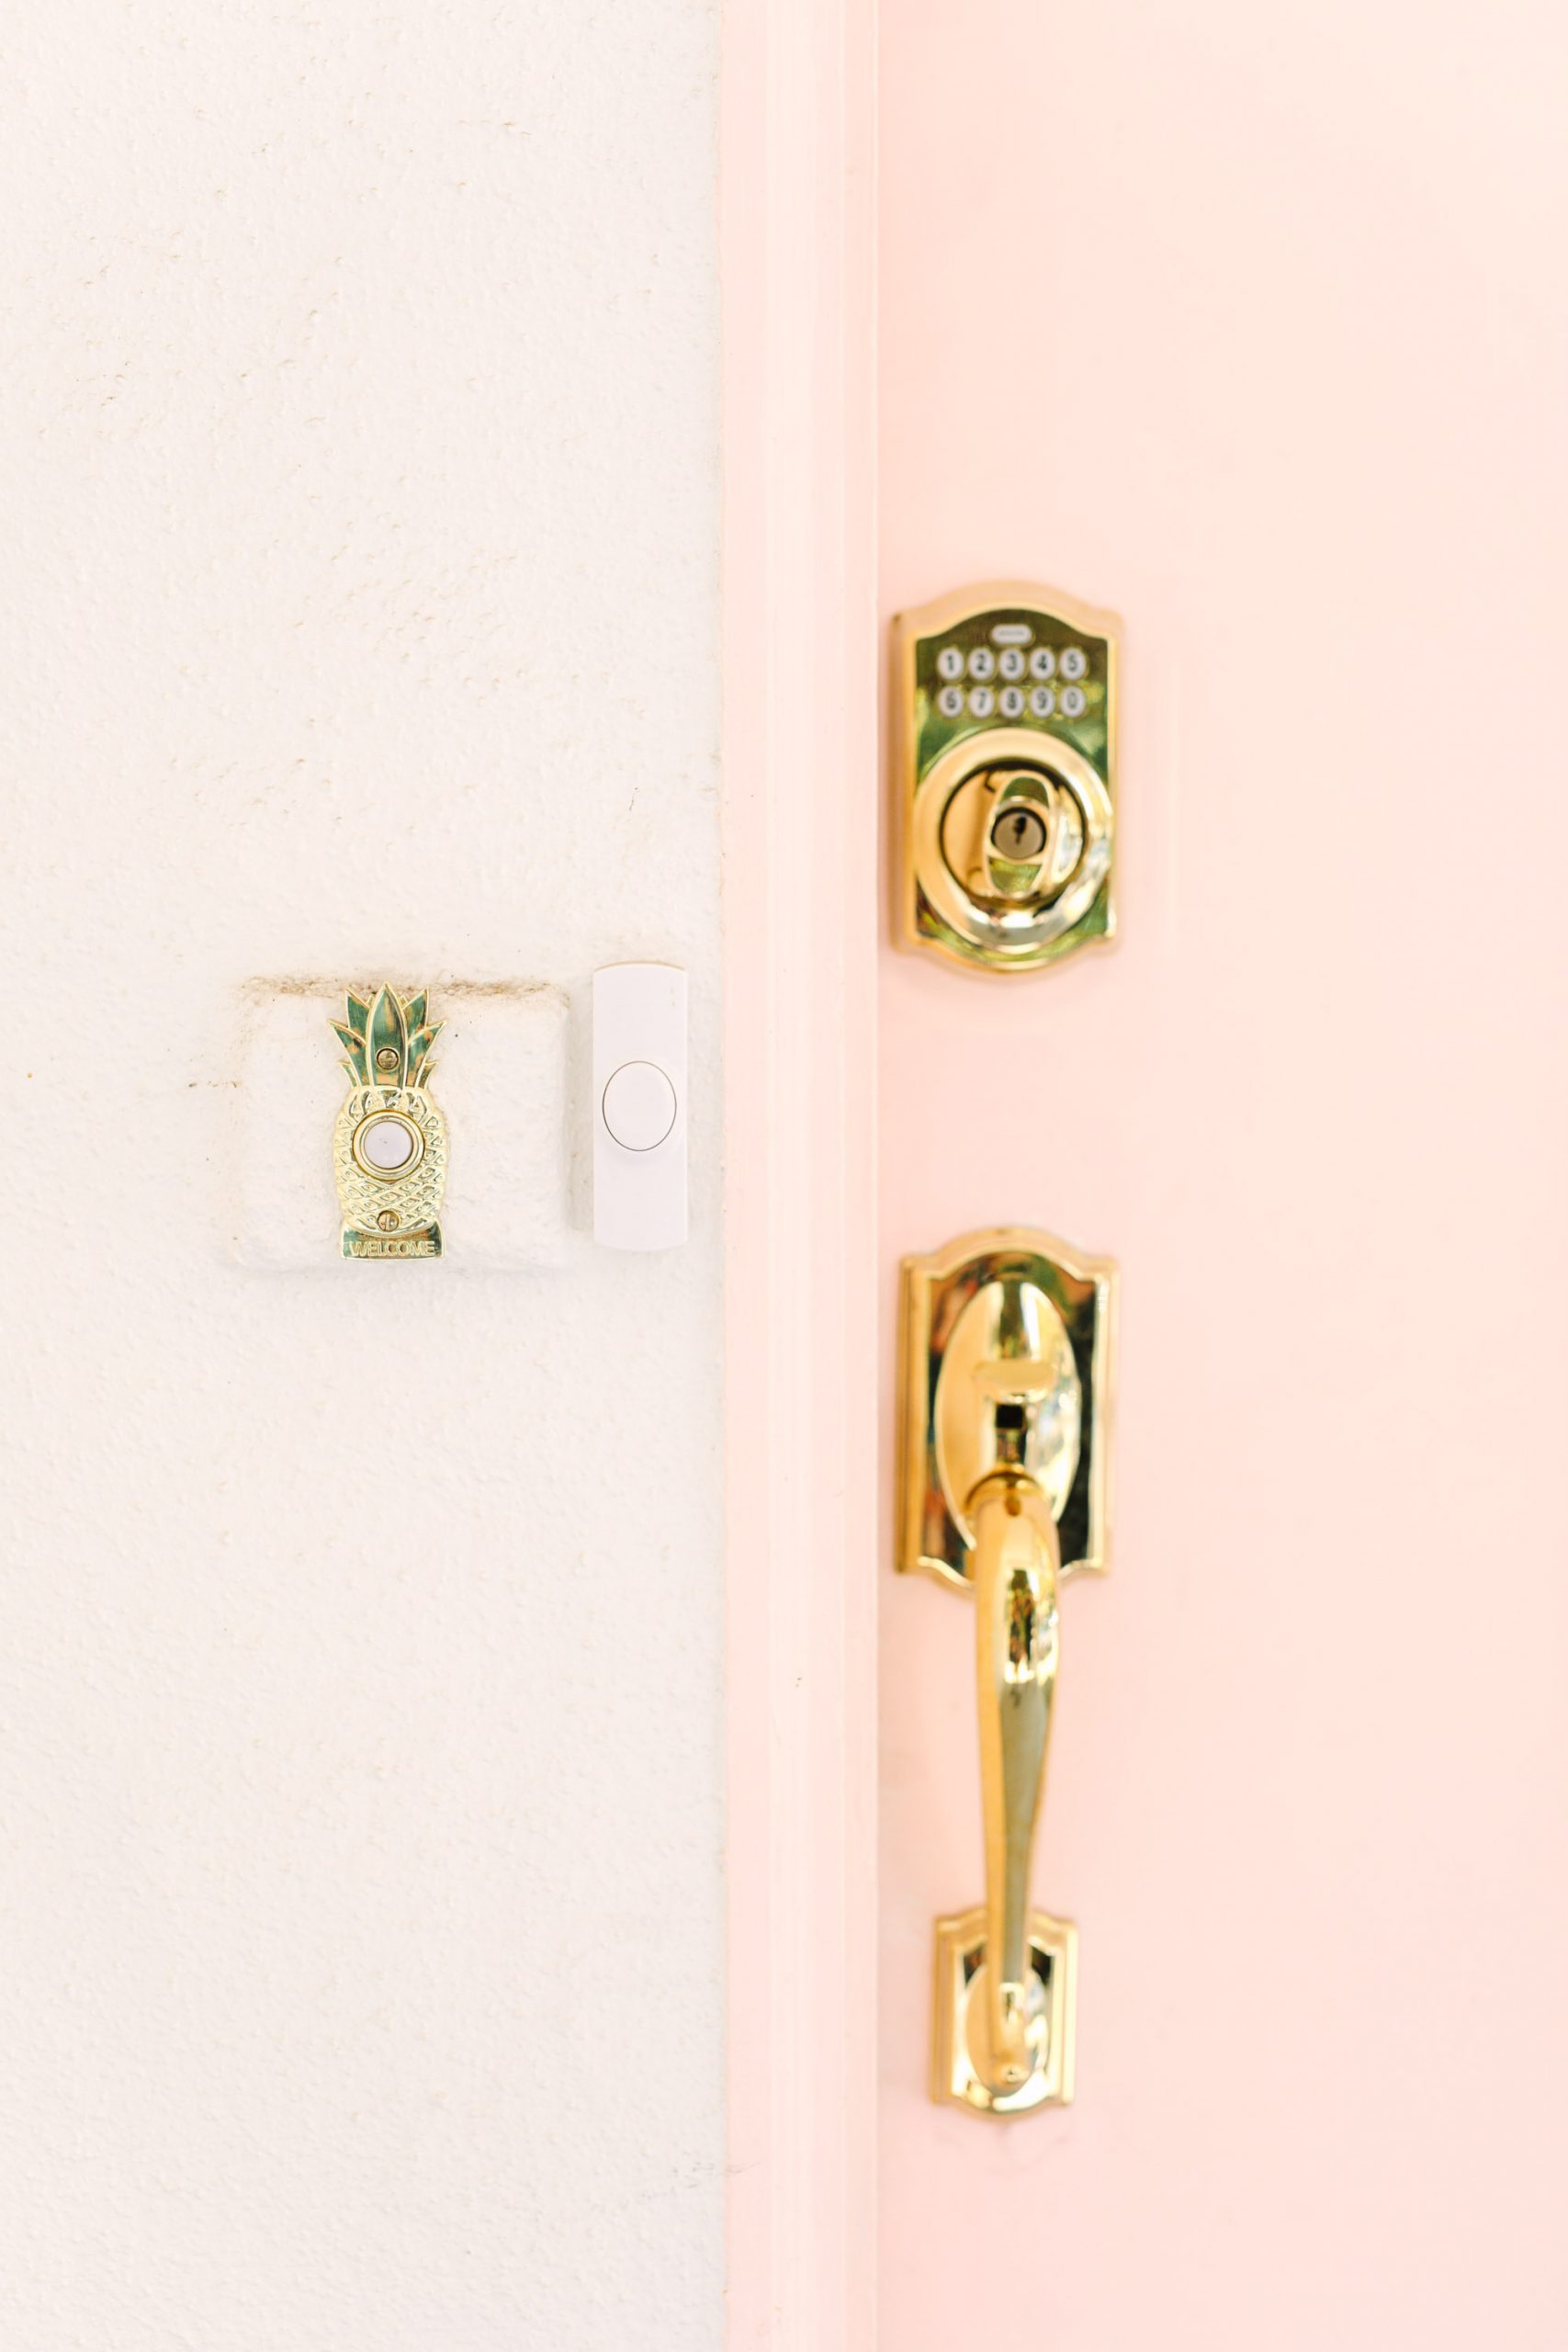 Cute airbnb door opening with pineapple doorbell - www.marycostaweddings.com